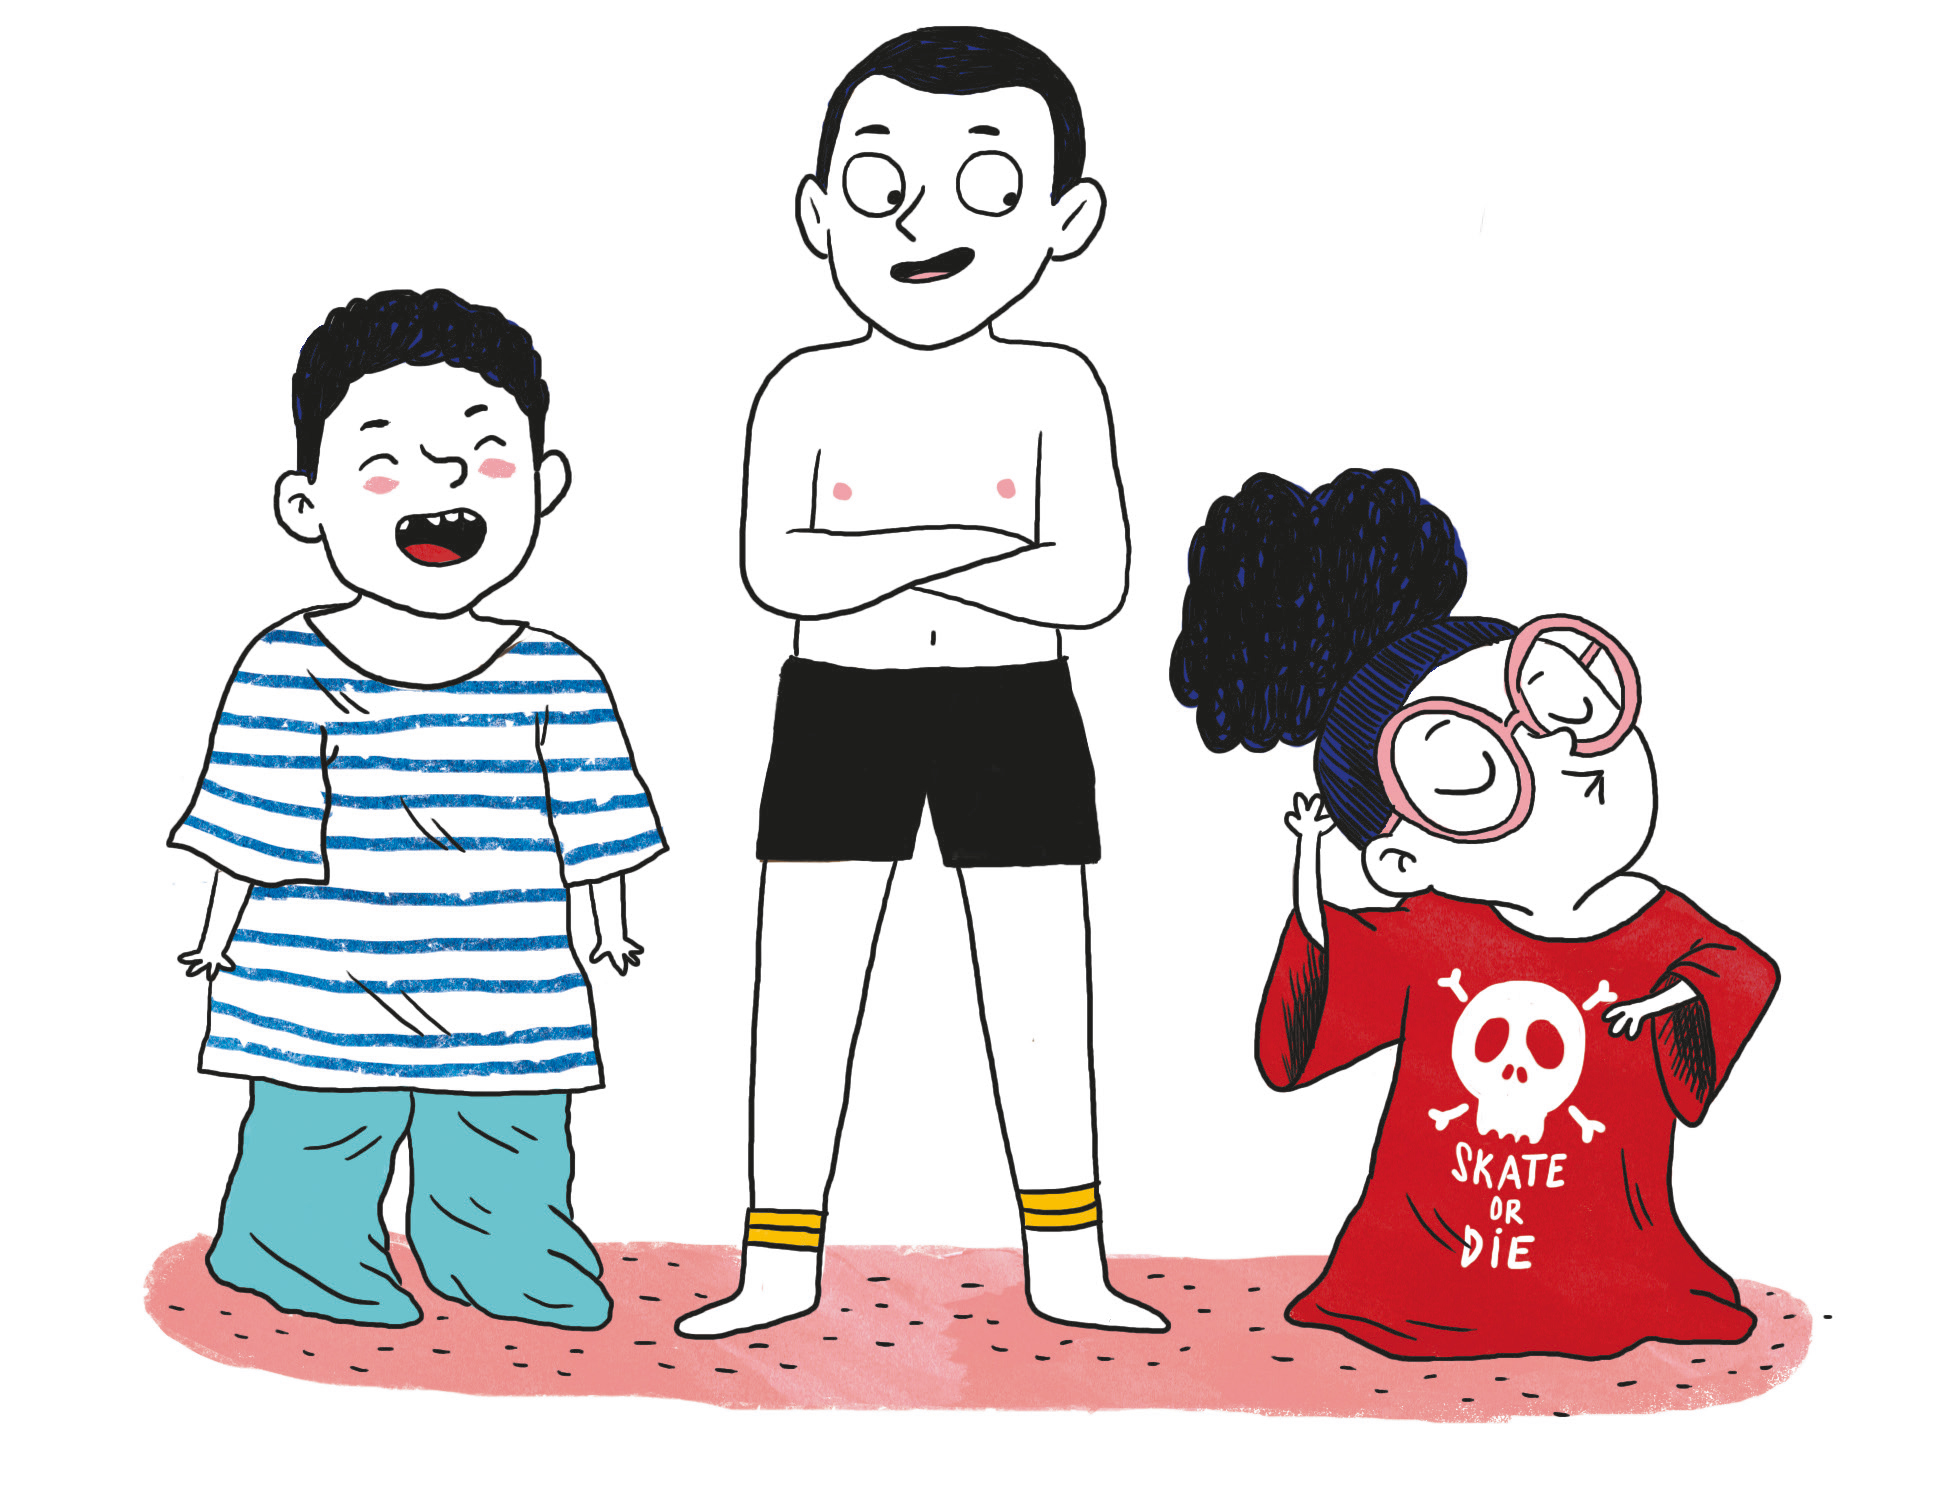 Illustration: Kinder tragen zu grosse Kleider